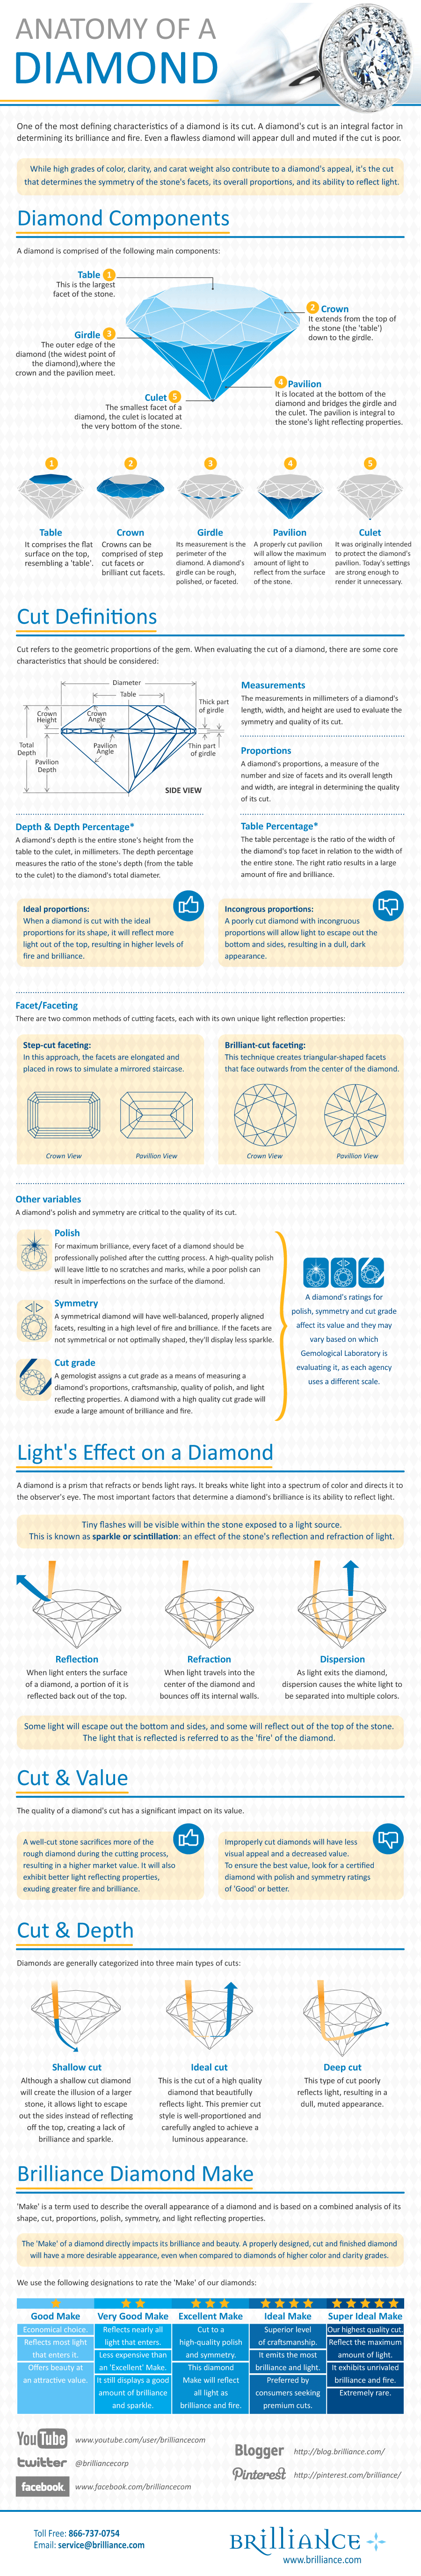 The Anatomy of a Diamond 